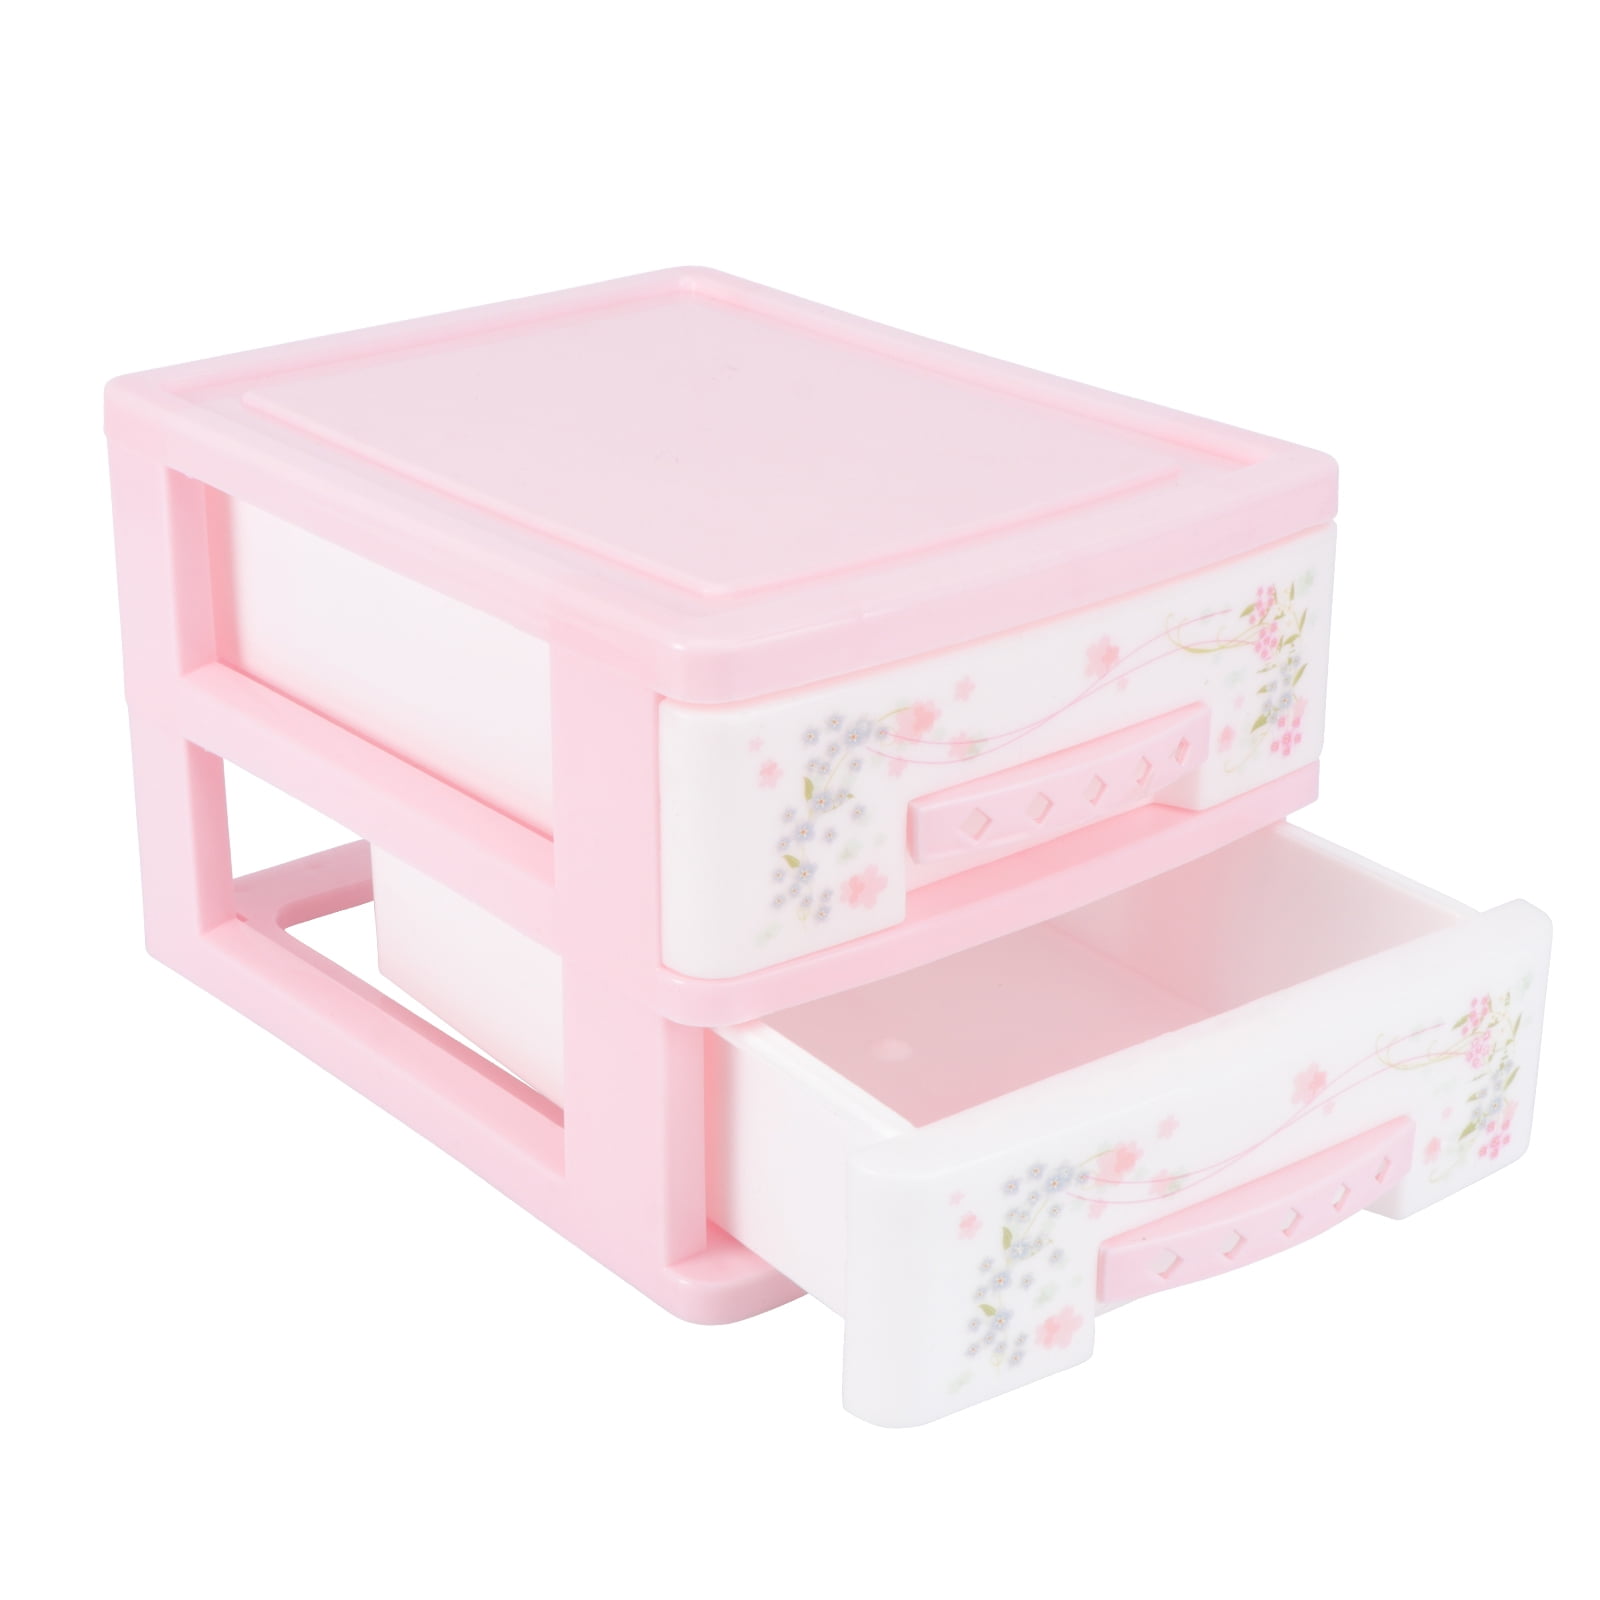 The Original Pink Box Pb12pbs 12-Drawer Small Parts Organizer, Pink